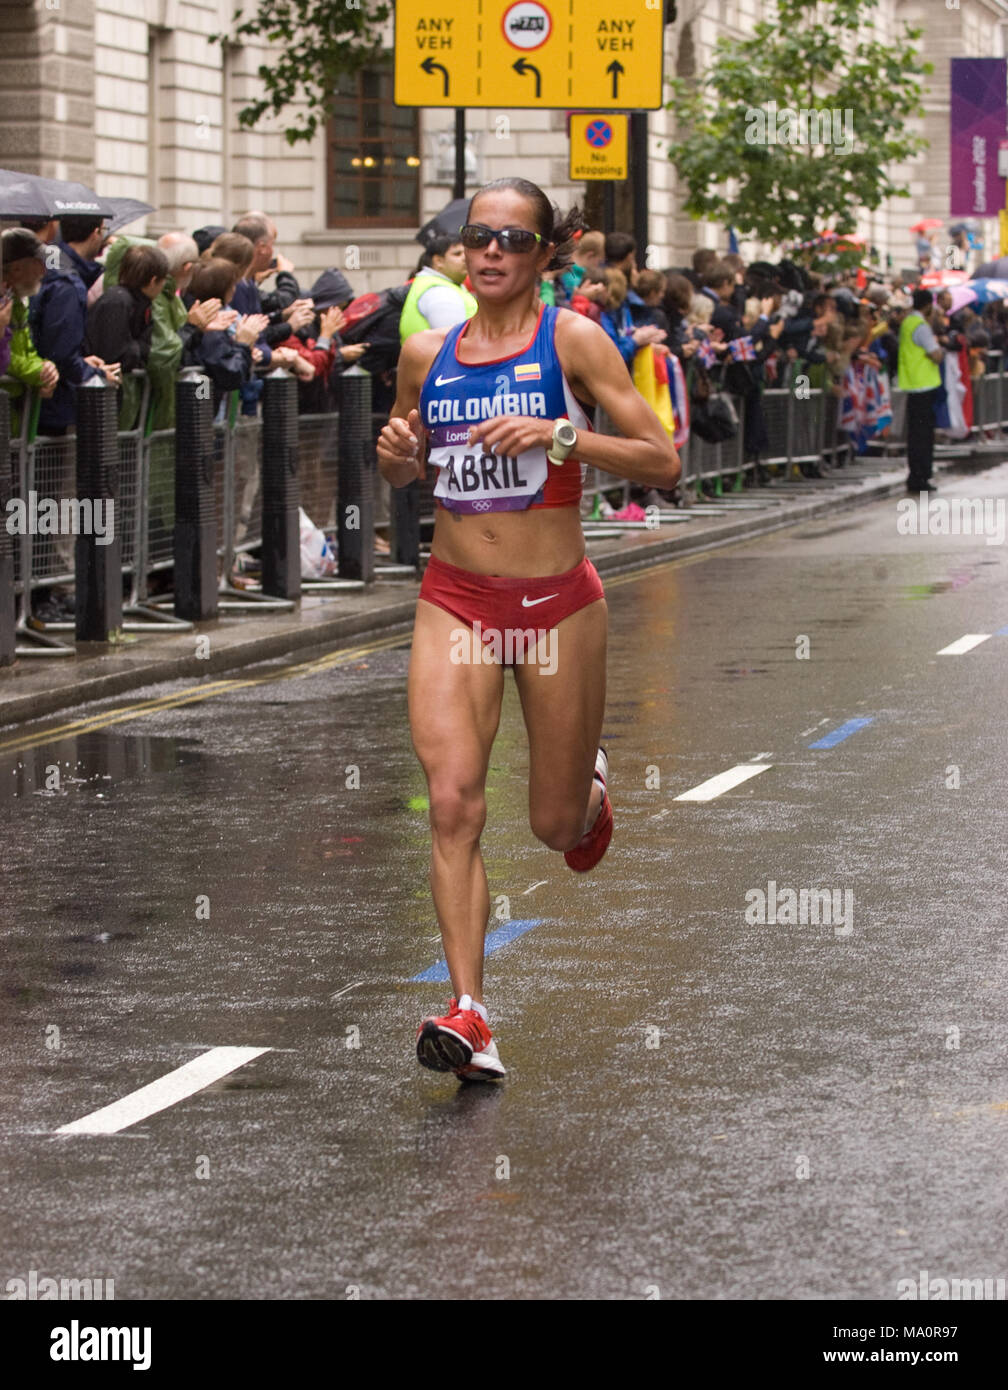 Olympic Games - London 2012 - Women's Marathon Race Stock Photo